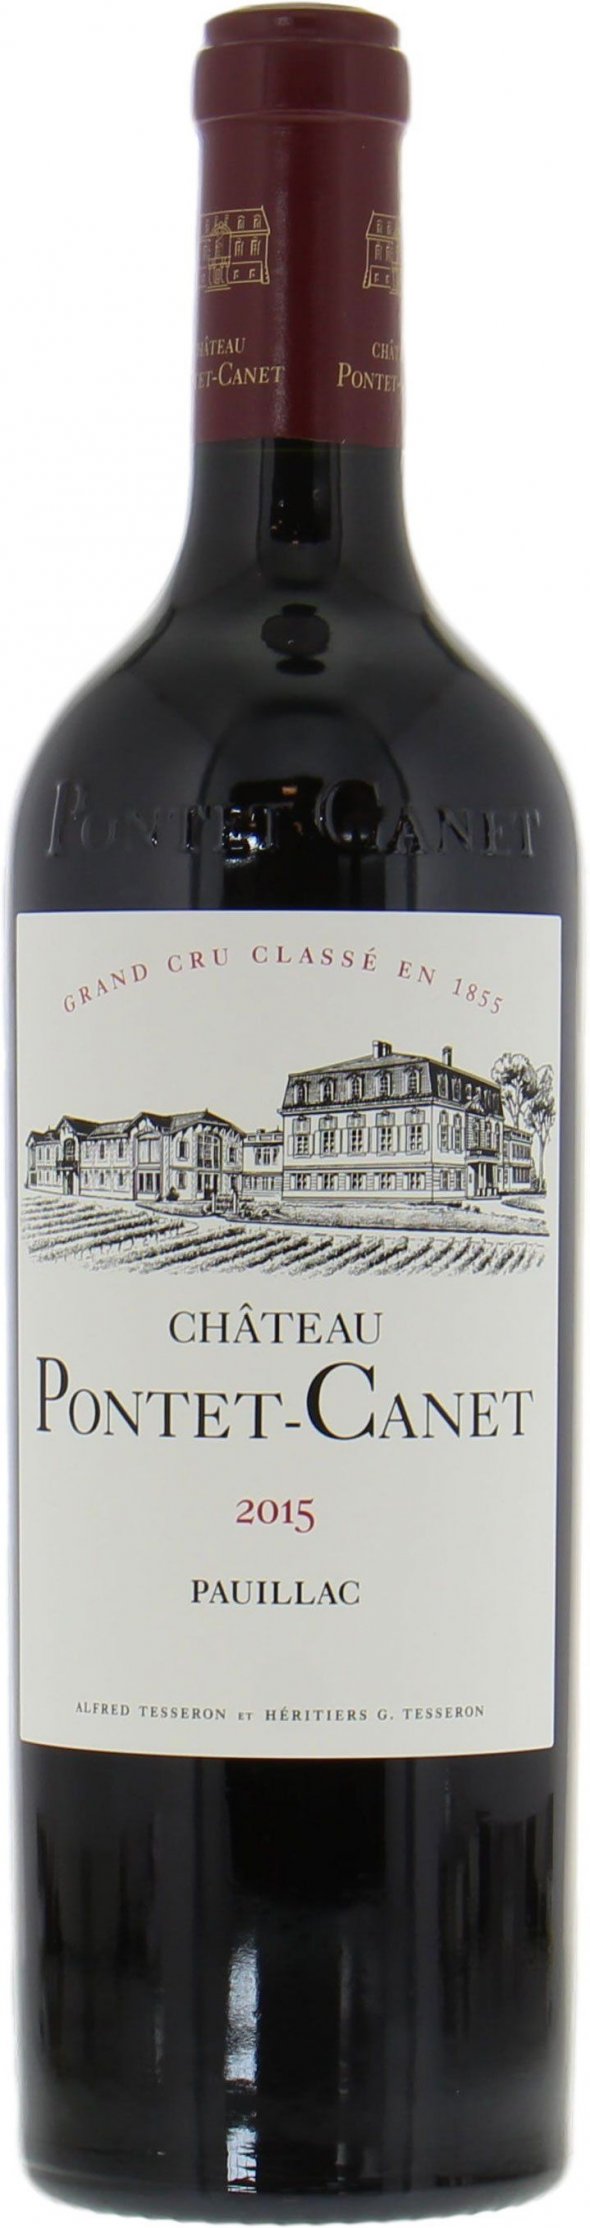 Chateau Pontet-Canet 5eme Cru Classe, Pauillac (RP 97pts)